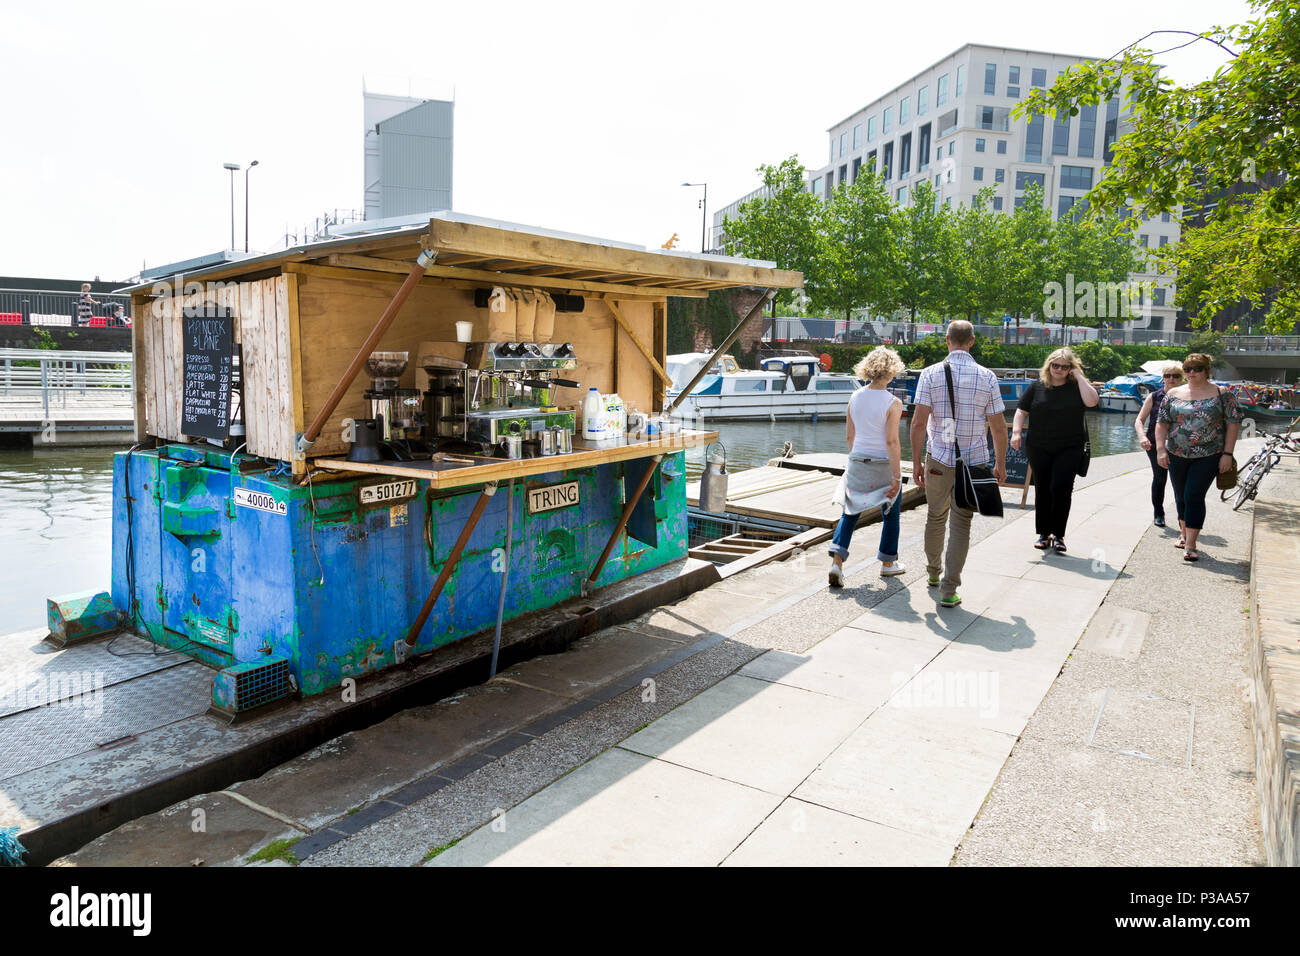 A floating coffee kiosk on the Regents Canal near Kings Cross, London, UK Stock Photo